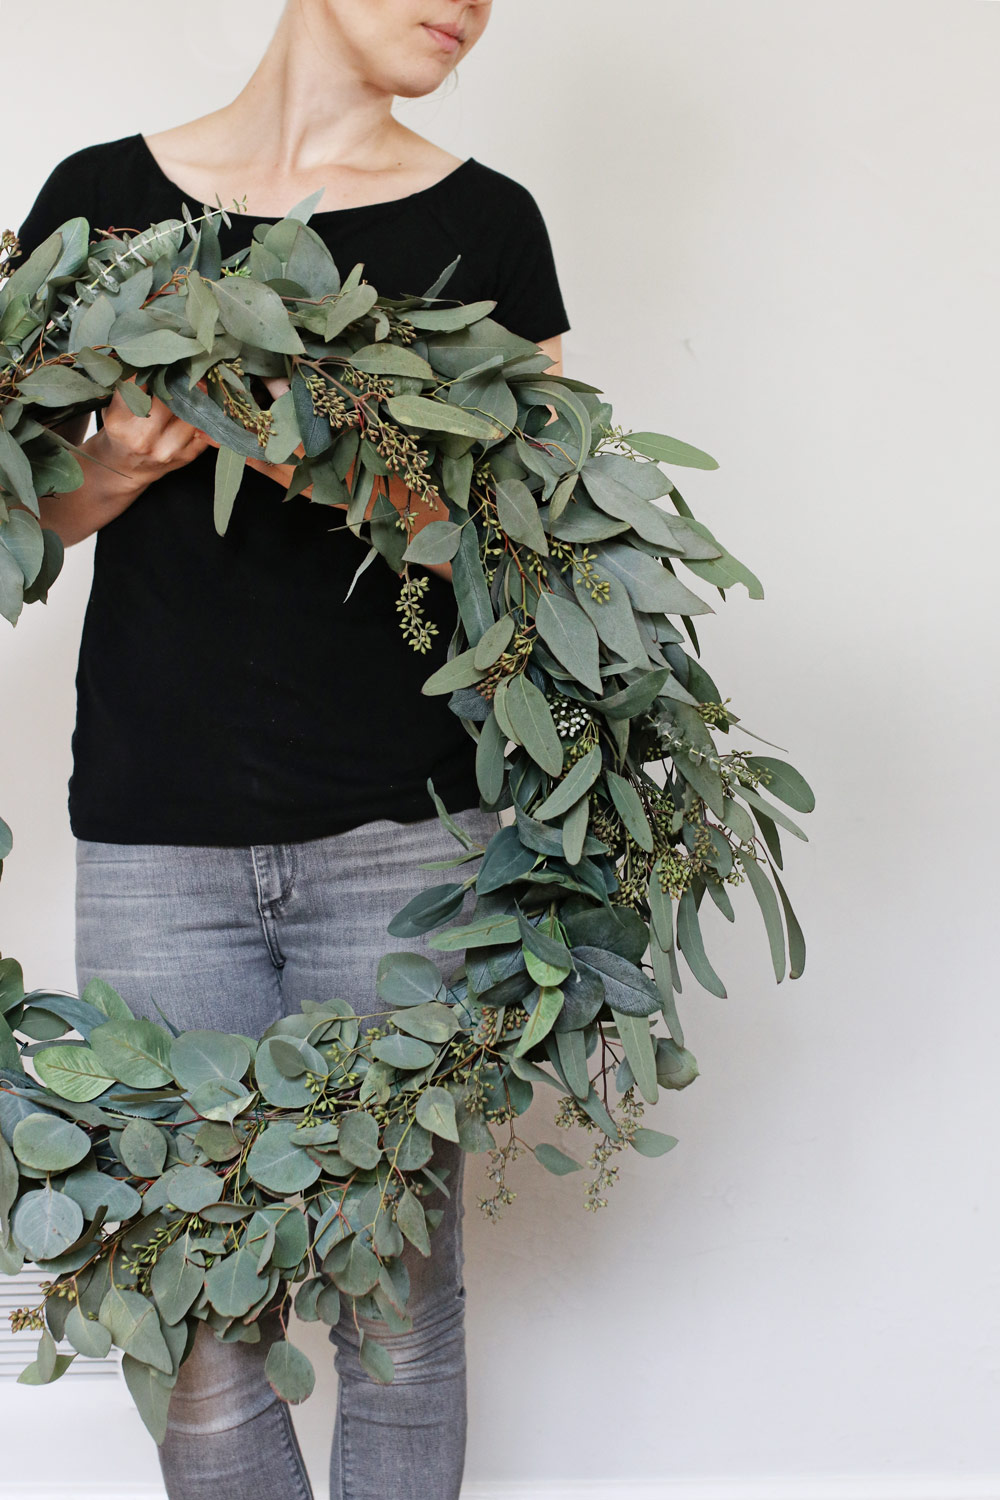 DIY Eucalyptus Wreath Tutorial